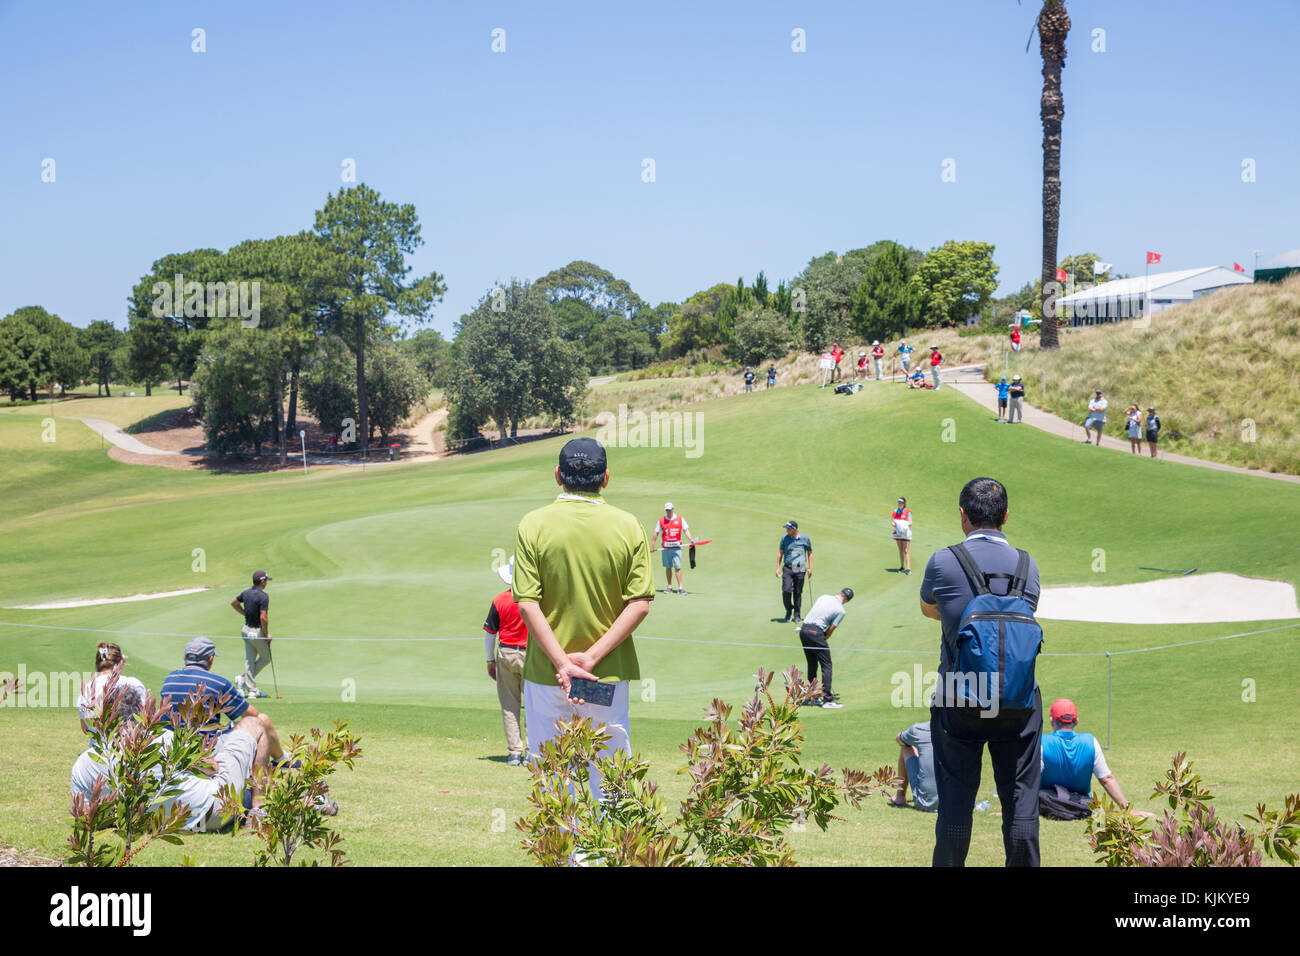 Emirates Australian PGA open golf tournament in Sydney,Australia, players on the golf course Stock Photo